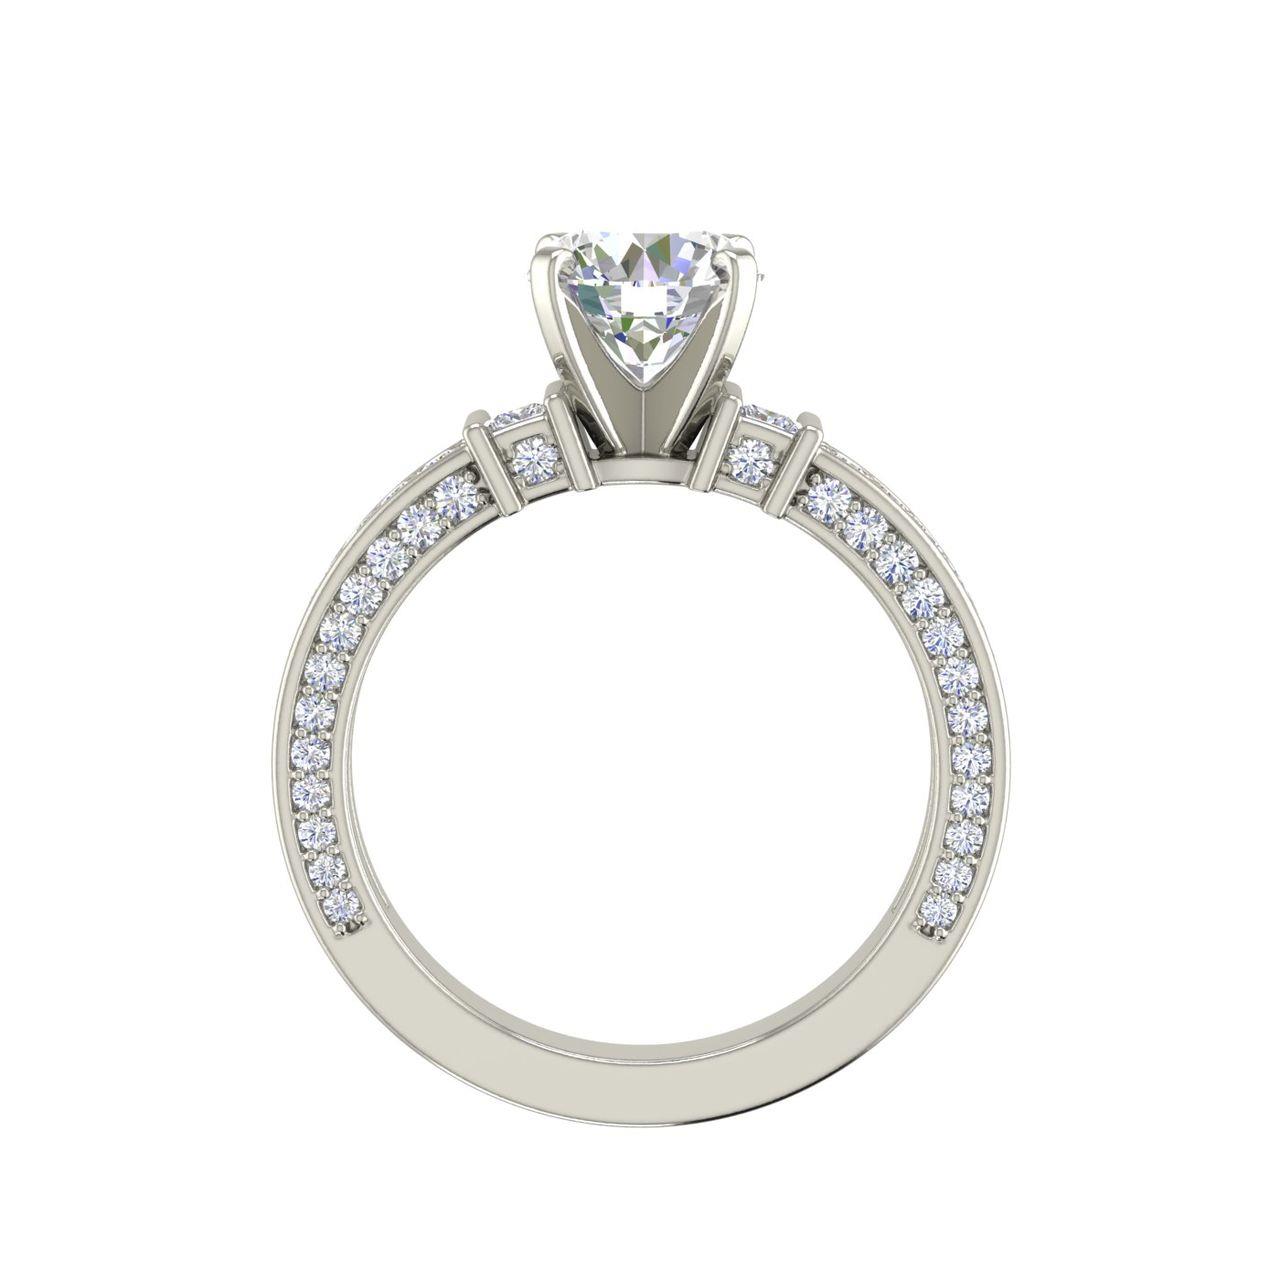 Three Sided Pave 1.35 Carat Round Cut Diamond Engagement Ring